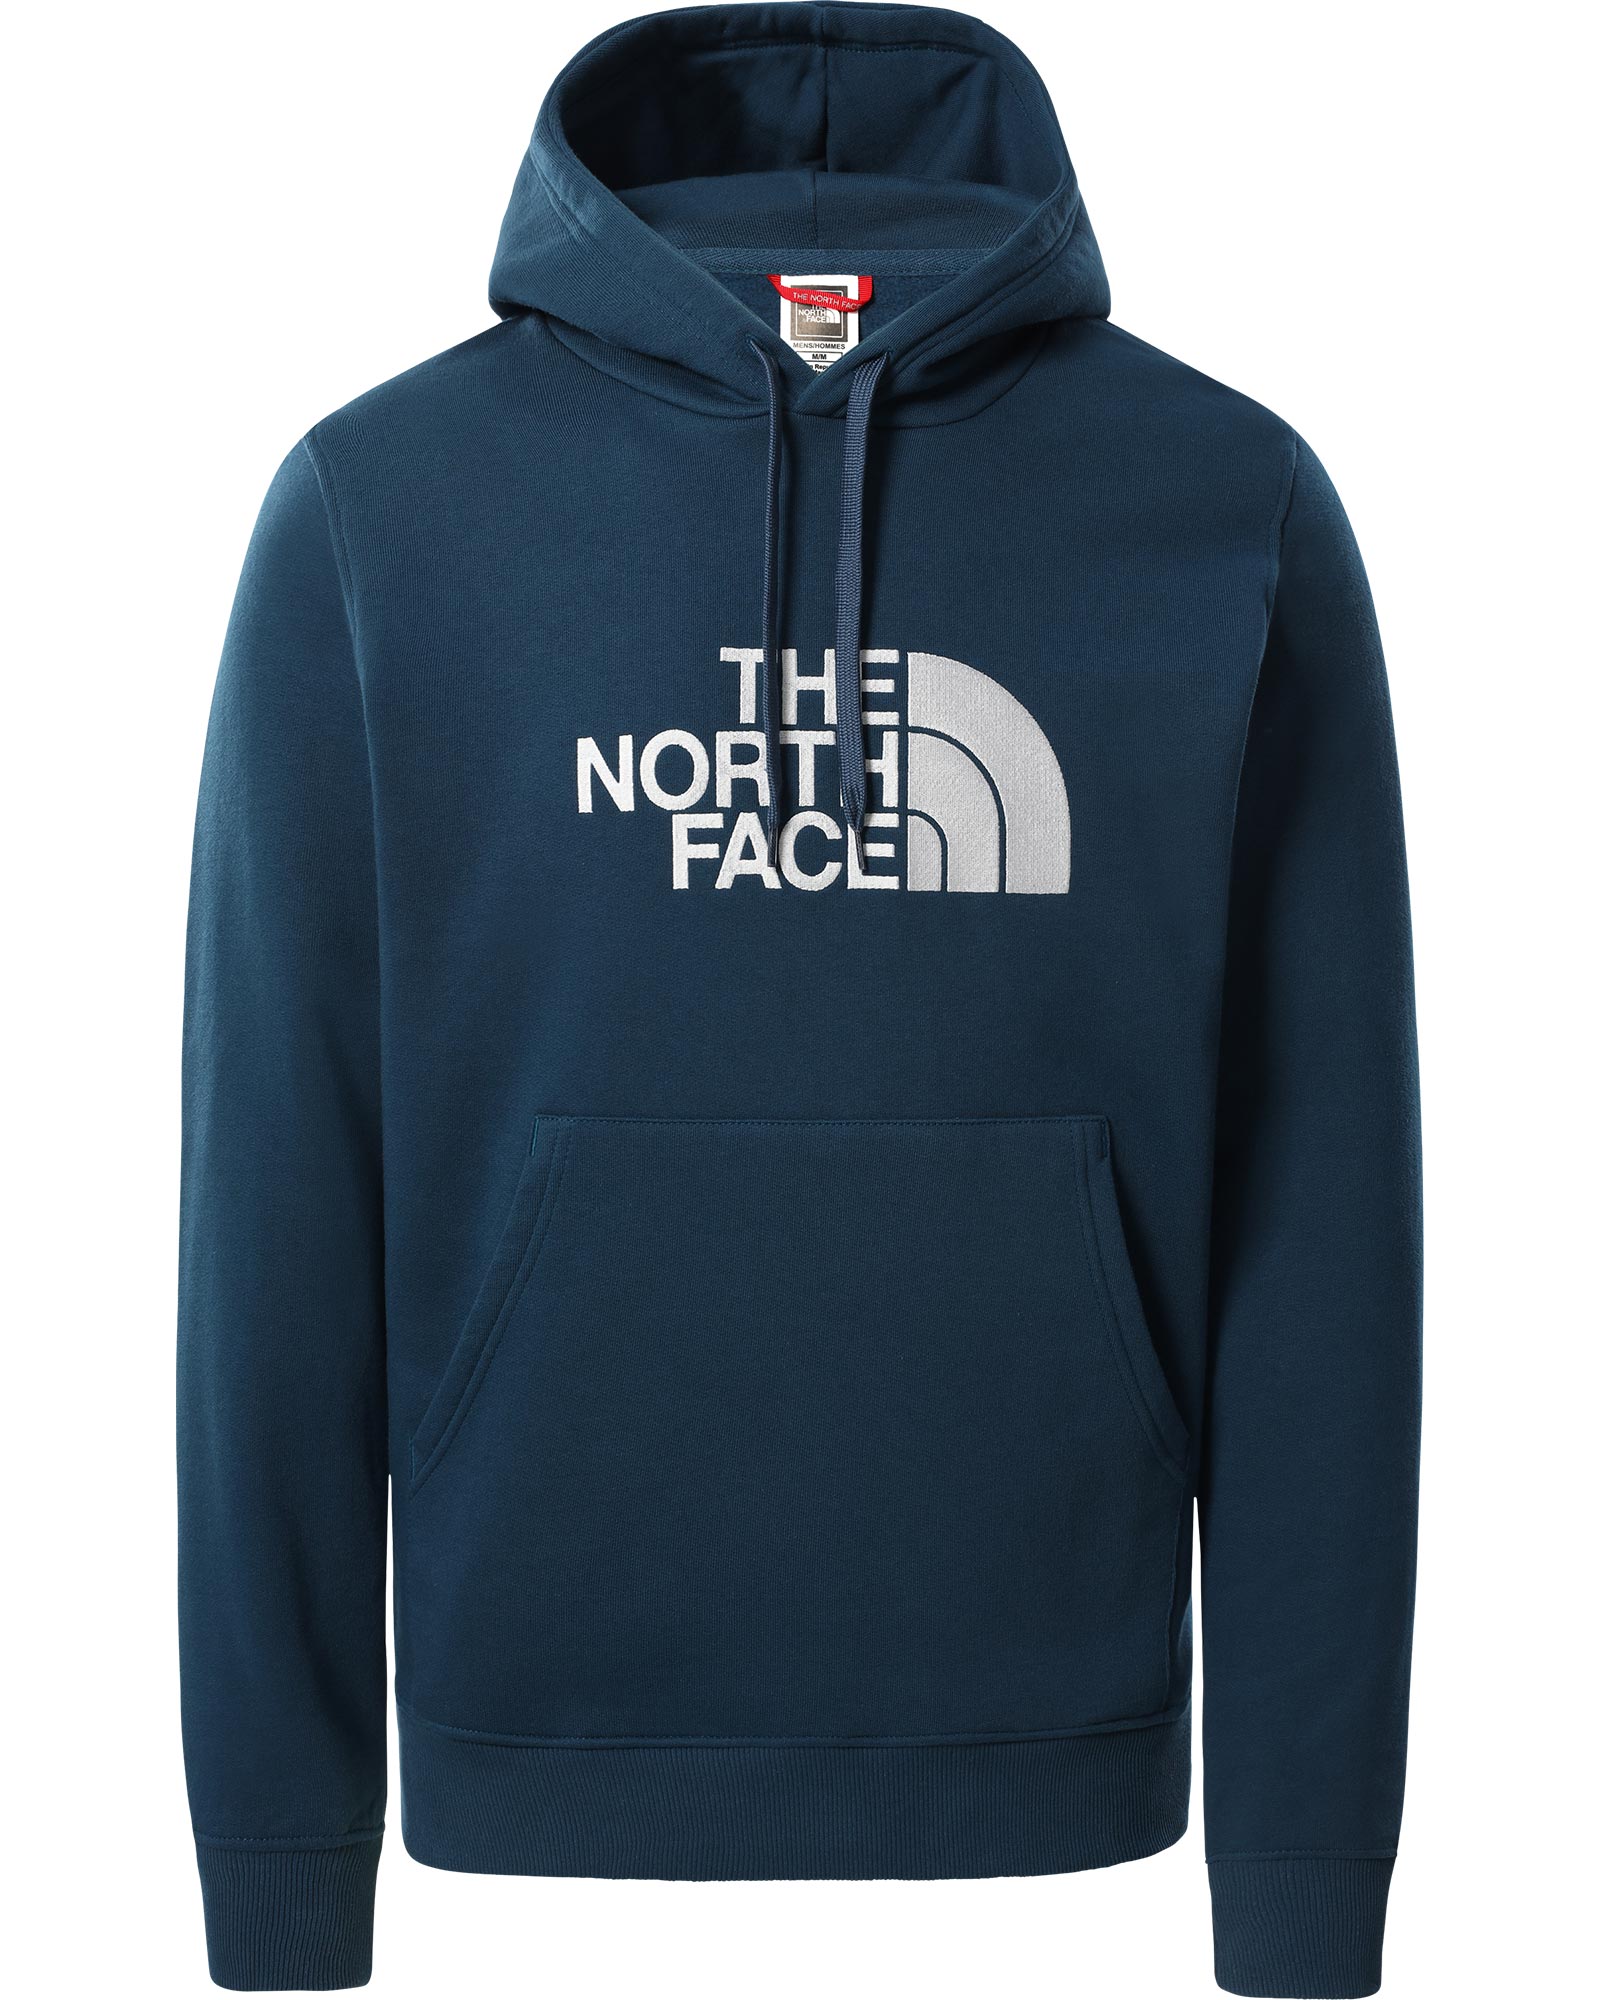 The North Face Drew Peak Men’s Hoodie - Monterey Blue L